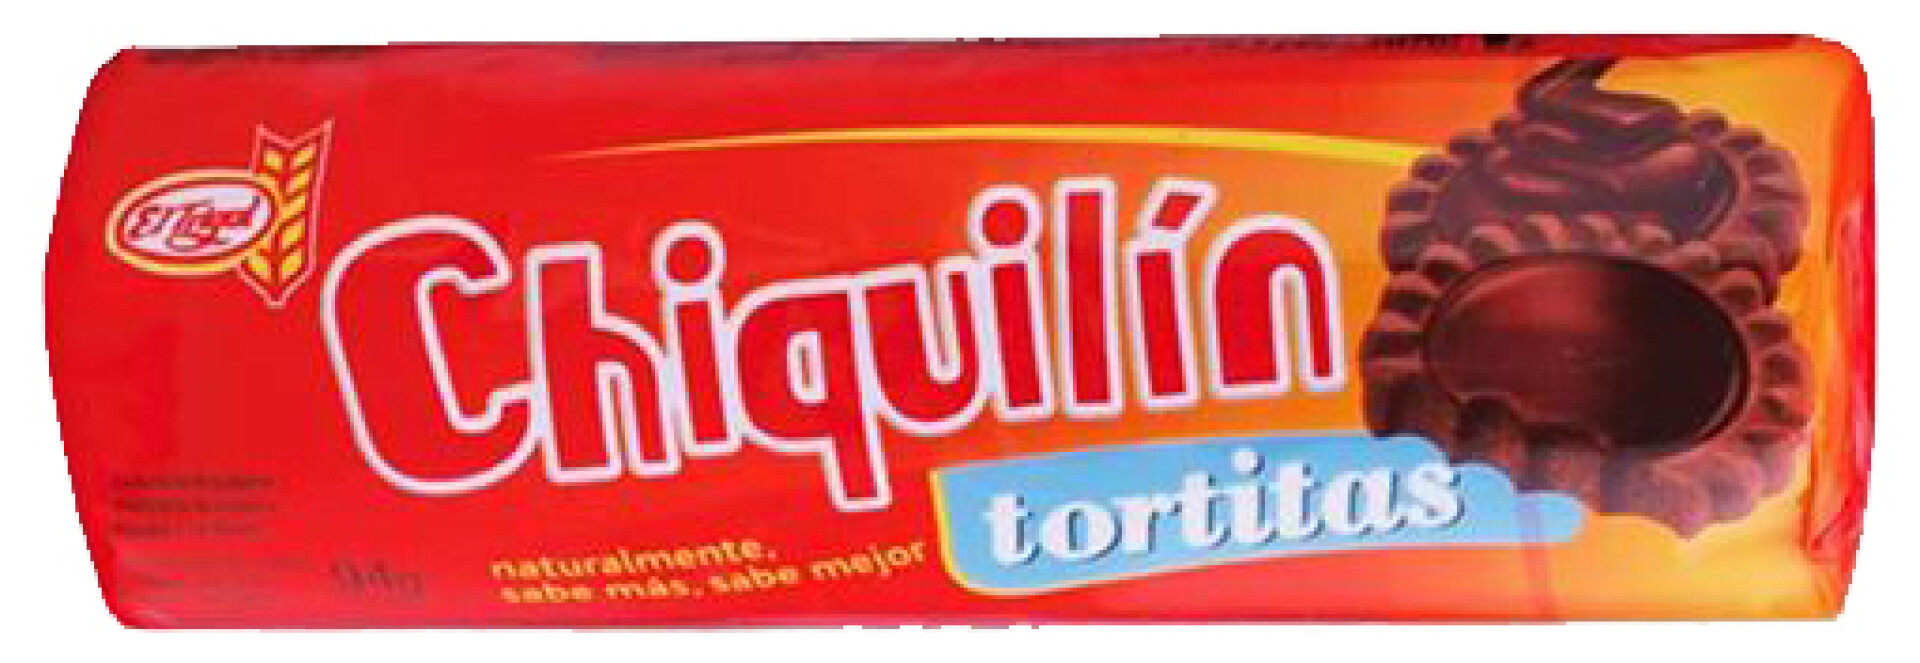 GALLETA CHIQUILIN TORTITAS 94G CHOCO 